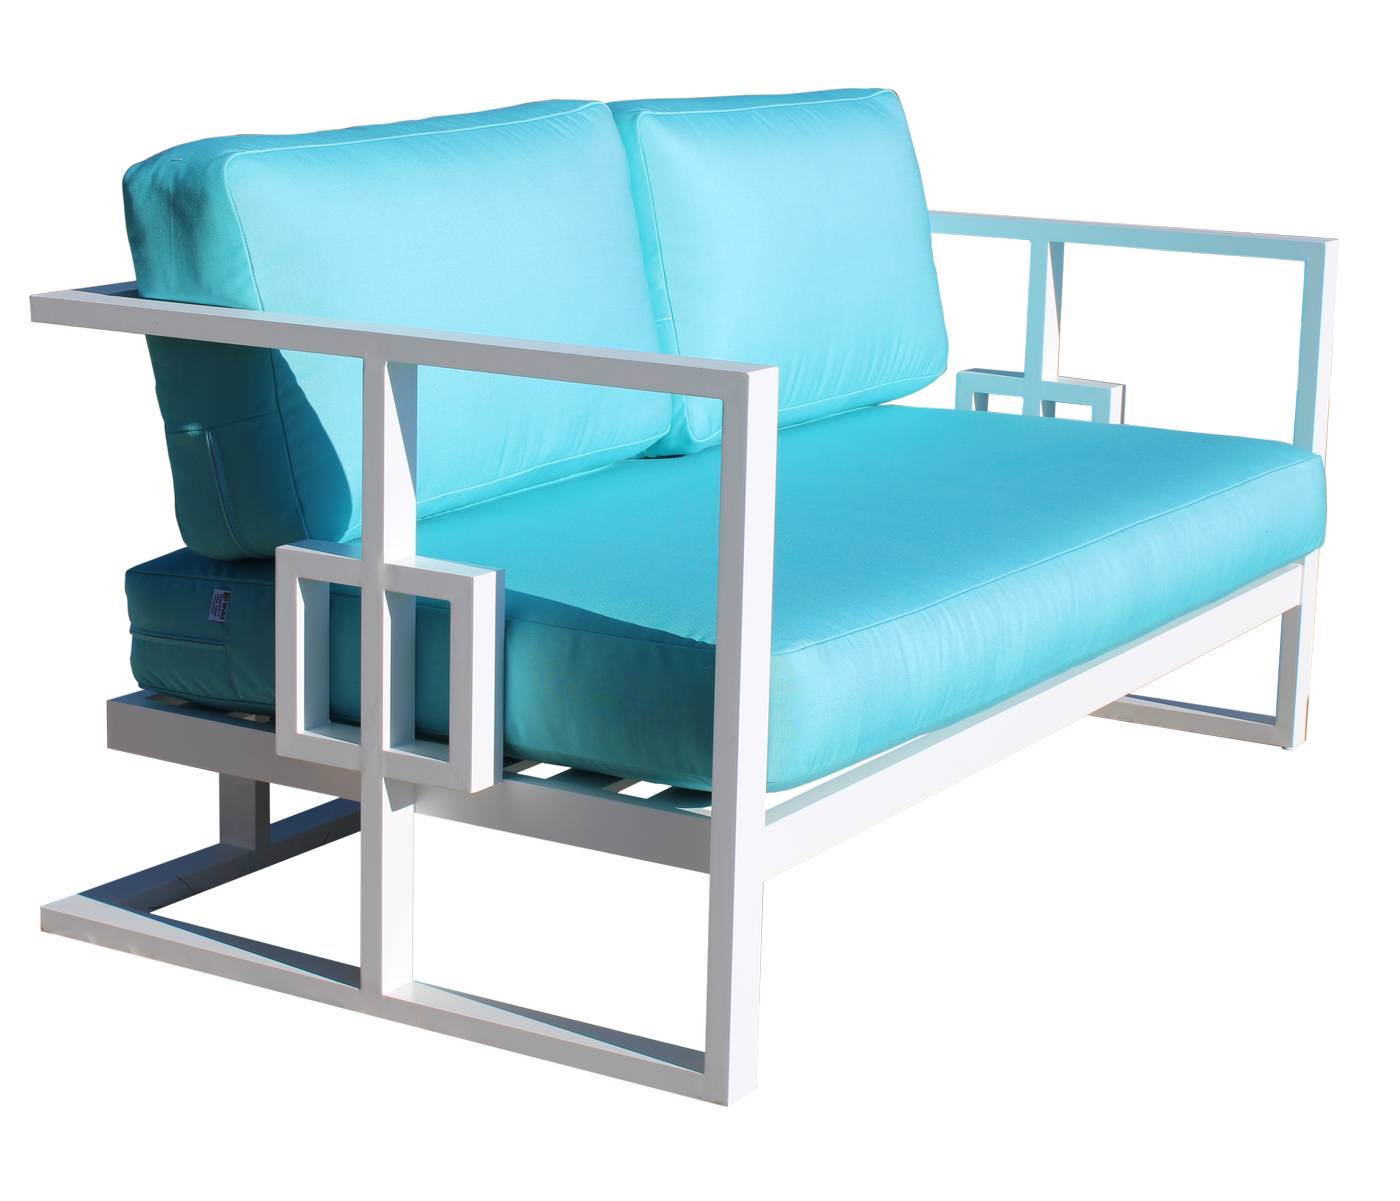 Set Aluminio Palermo-7 - Conjunto de aluminio: sofá de 2 plazas + 2 sillones + 1 mesa de centro. Disponible en color blanco, antracita, marrón, champagne o plata.